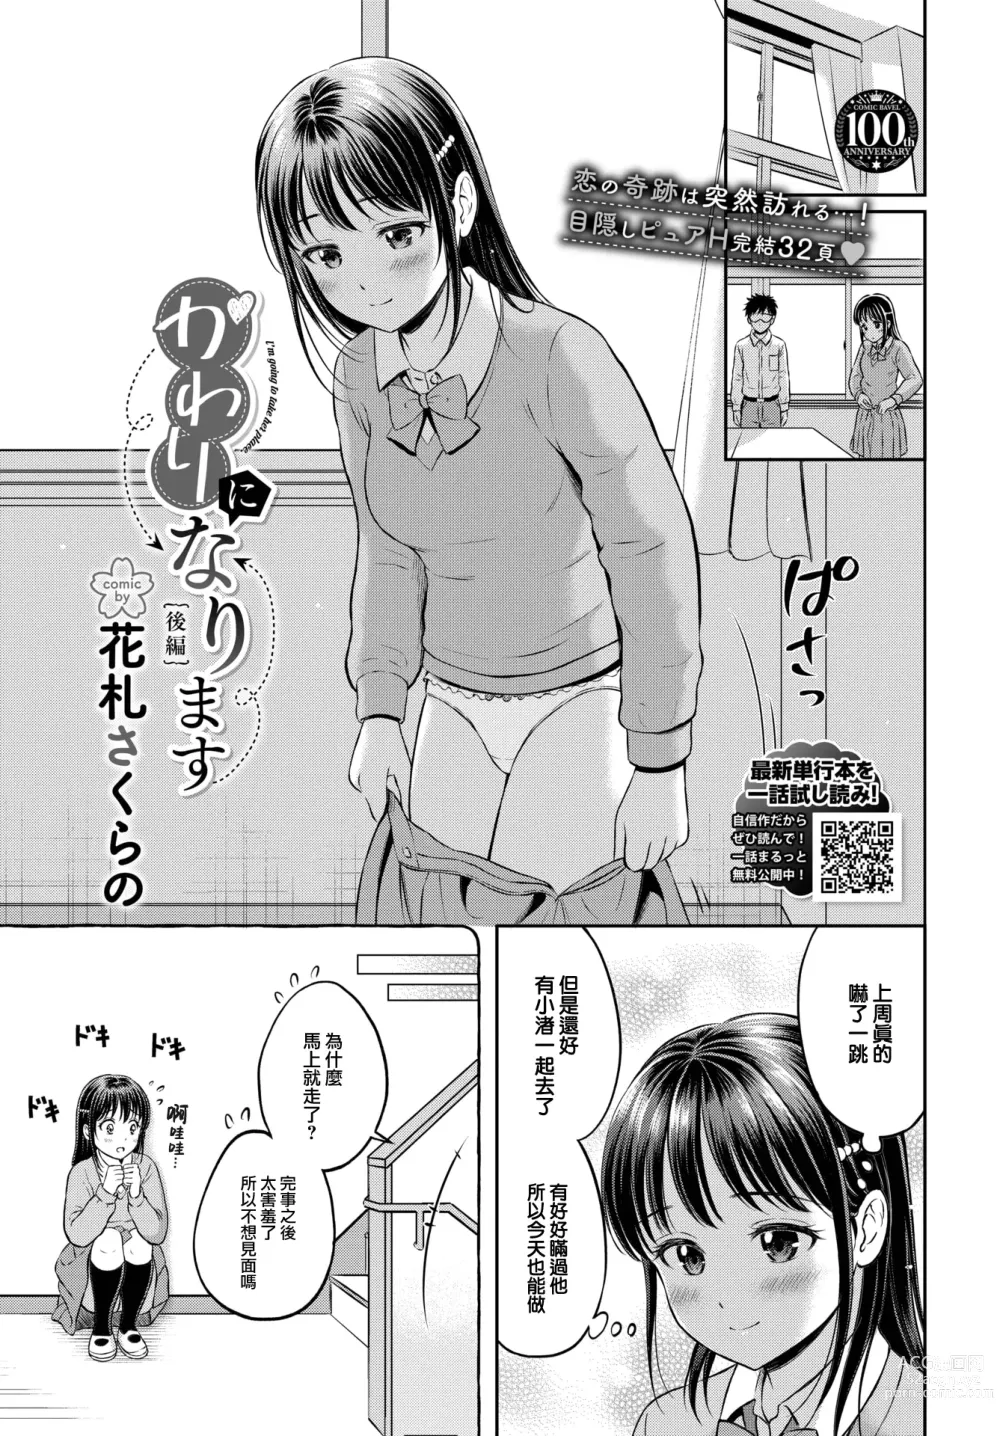 Page 2 of manga Kawari ni Narimasu - Im going to take her place. -Kouhen-